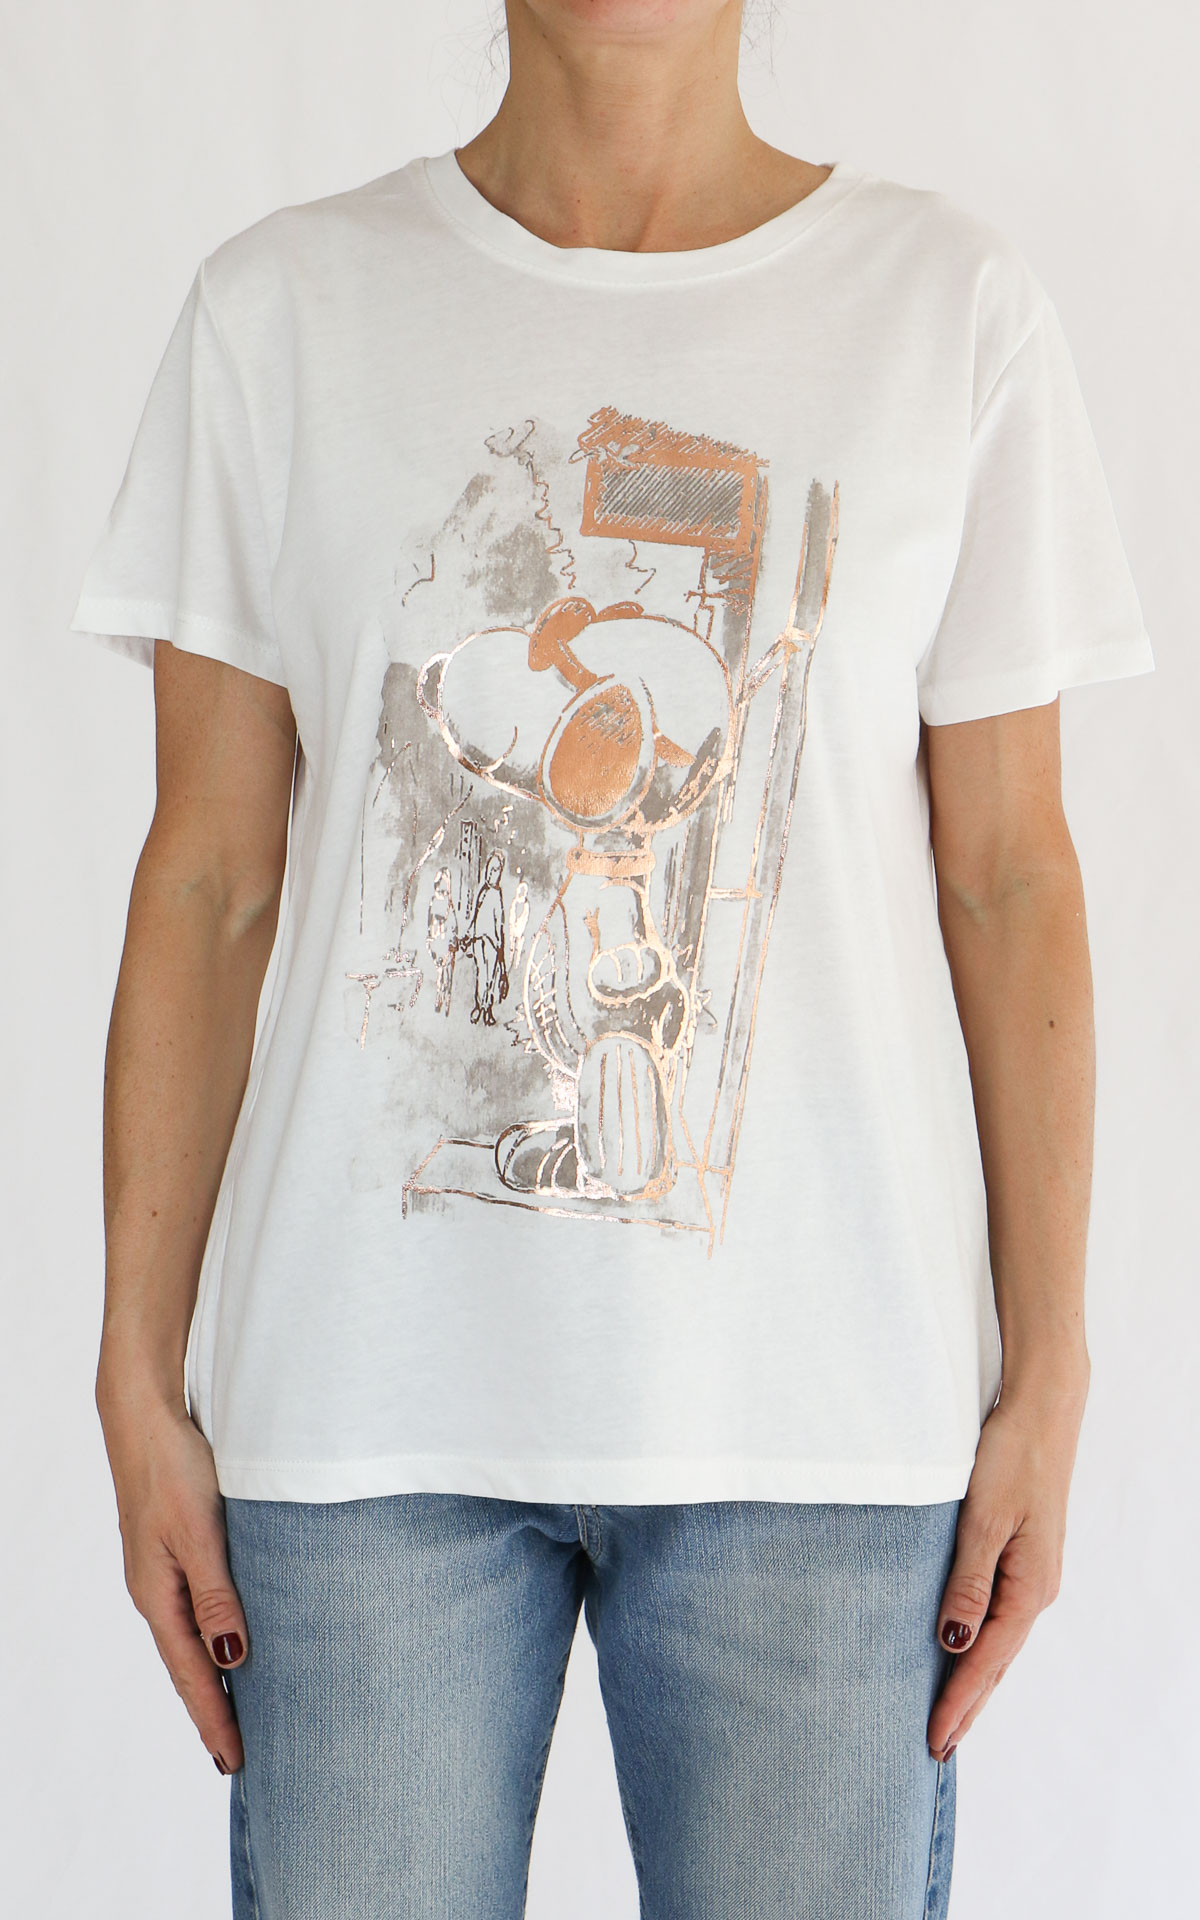 Off-on - T-shirt regular - Snoopy bronzo